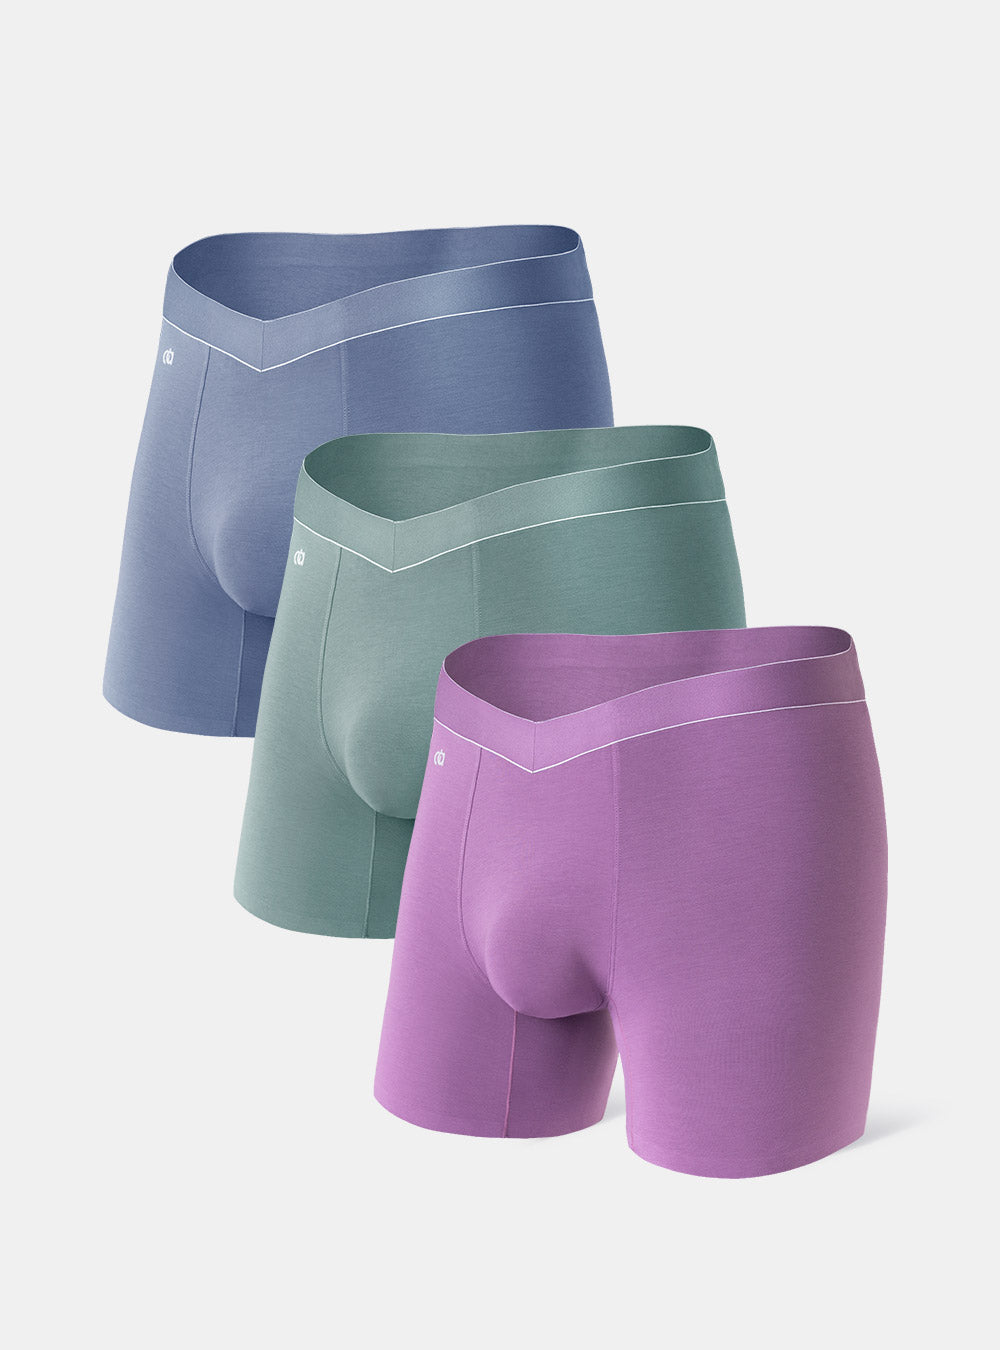 Bamboo Boxer Athletic Underwear by Spun Bamboo - Medium to X-Large Sizes